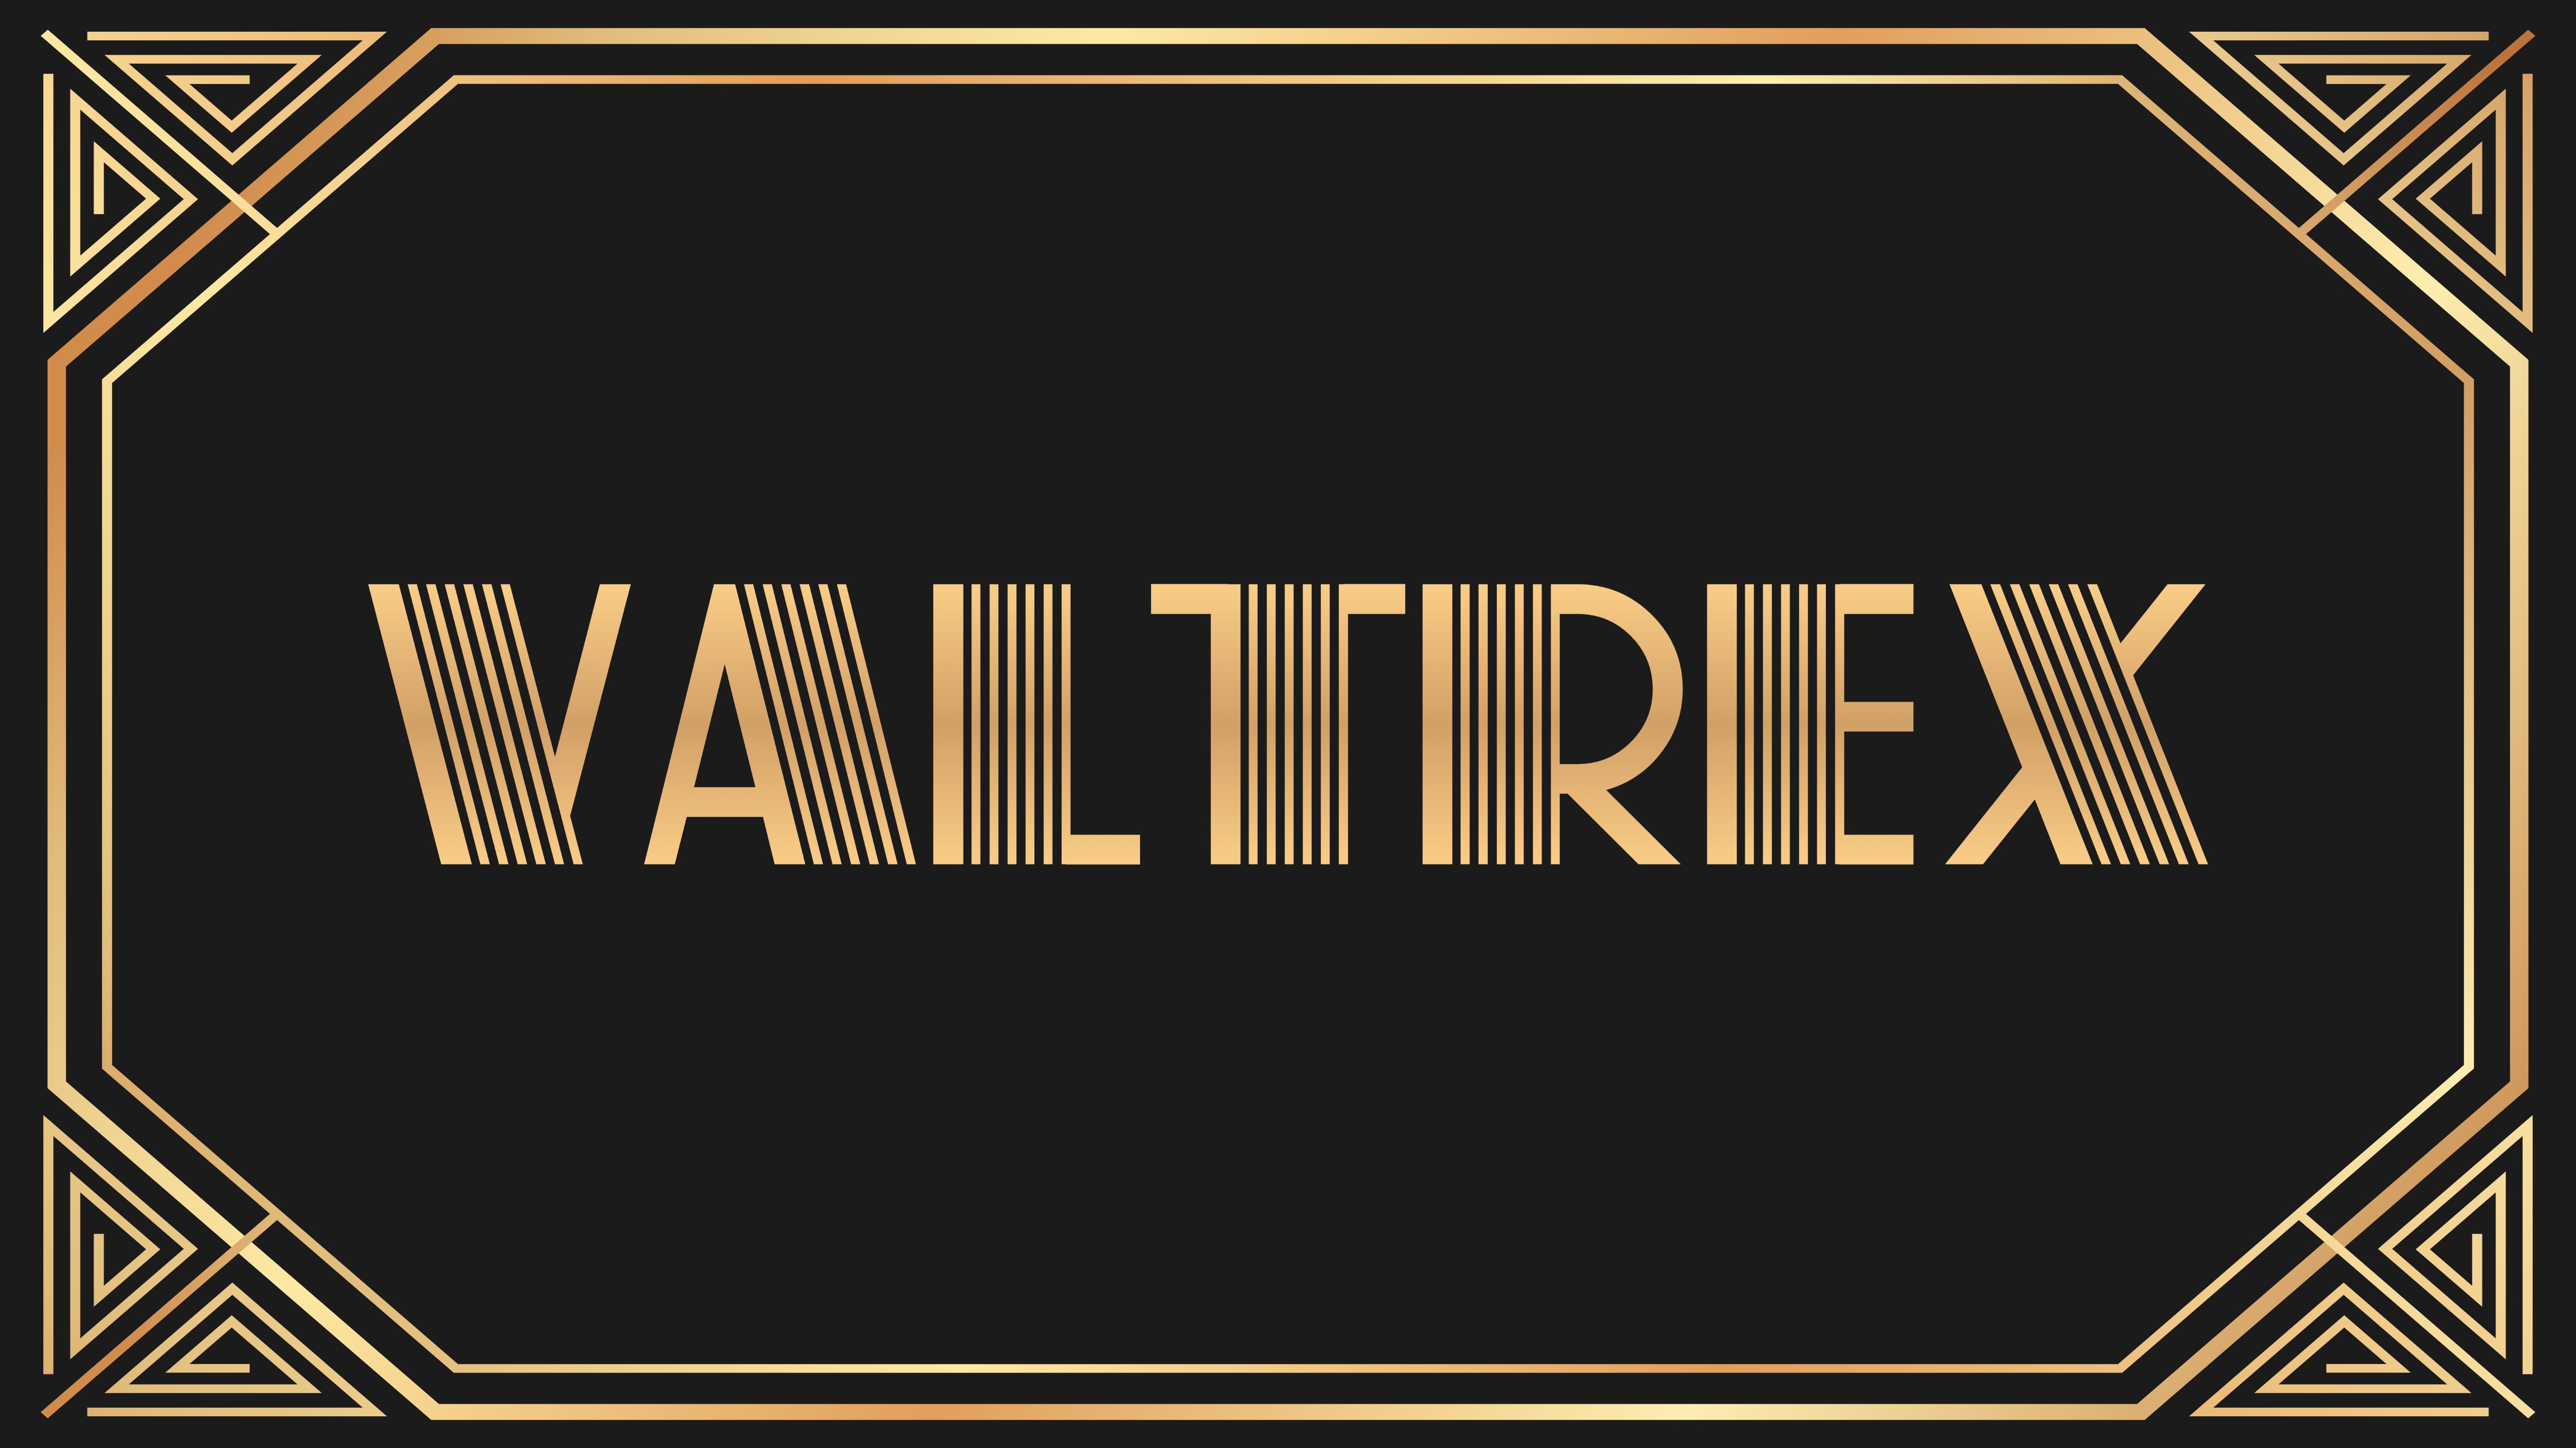 Valtrex Jazz Gold